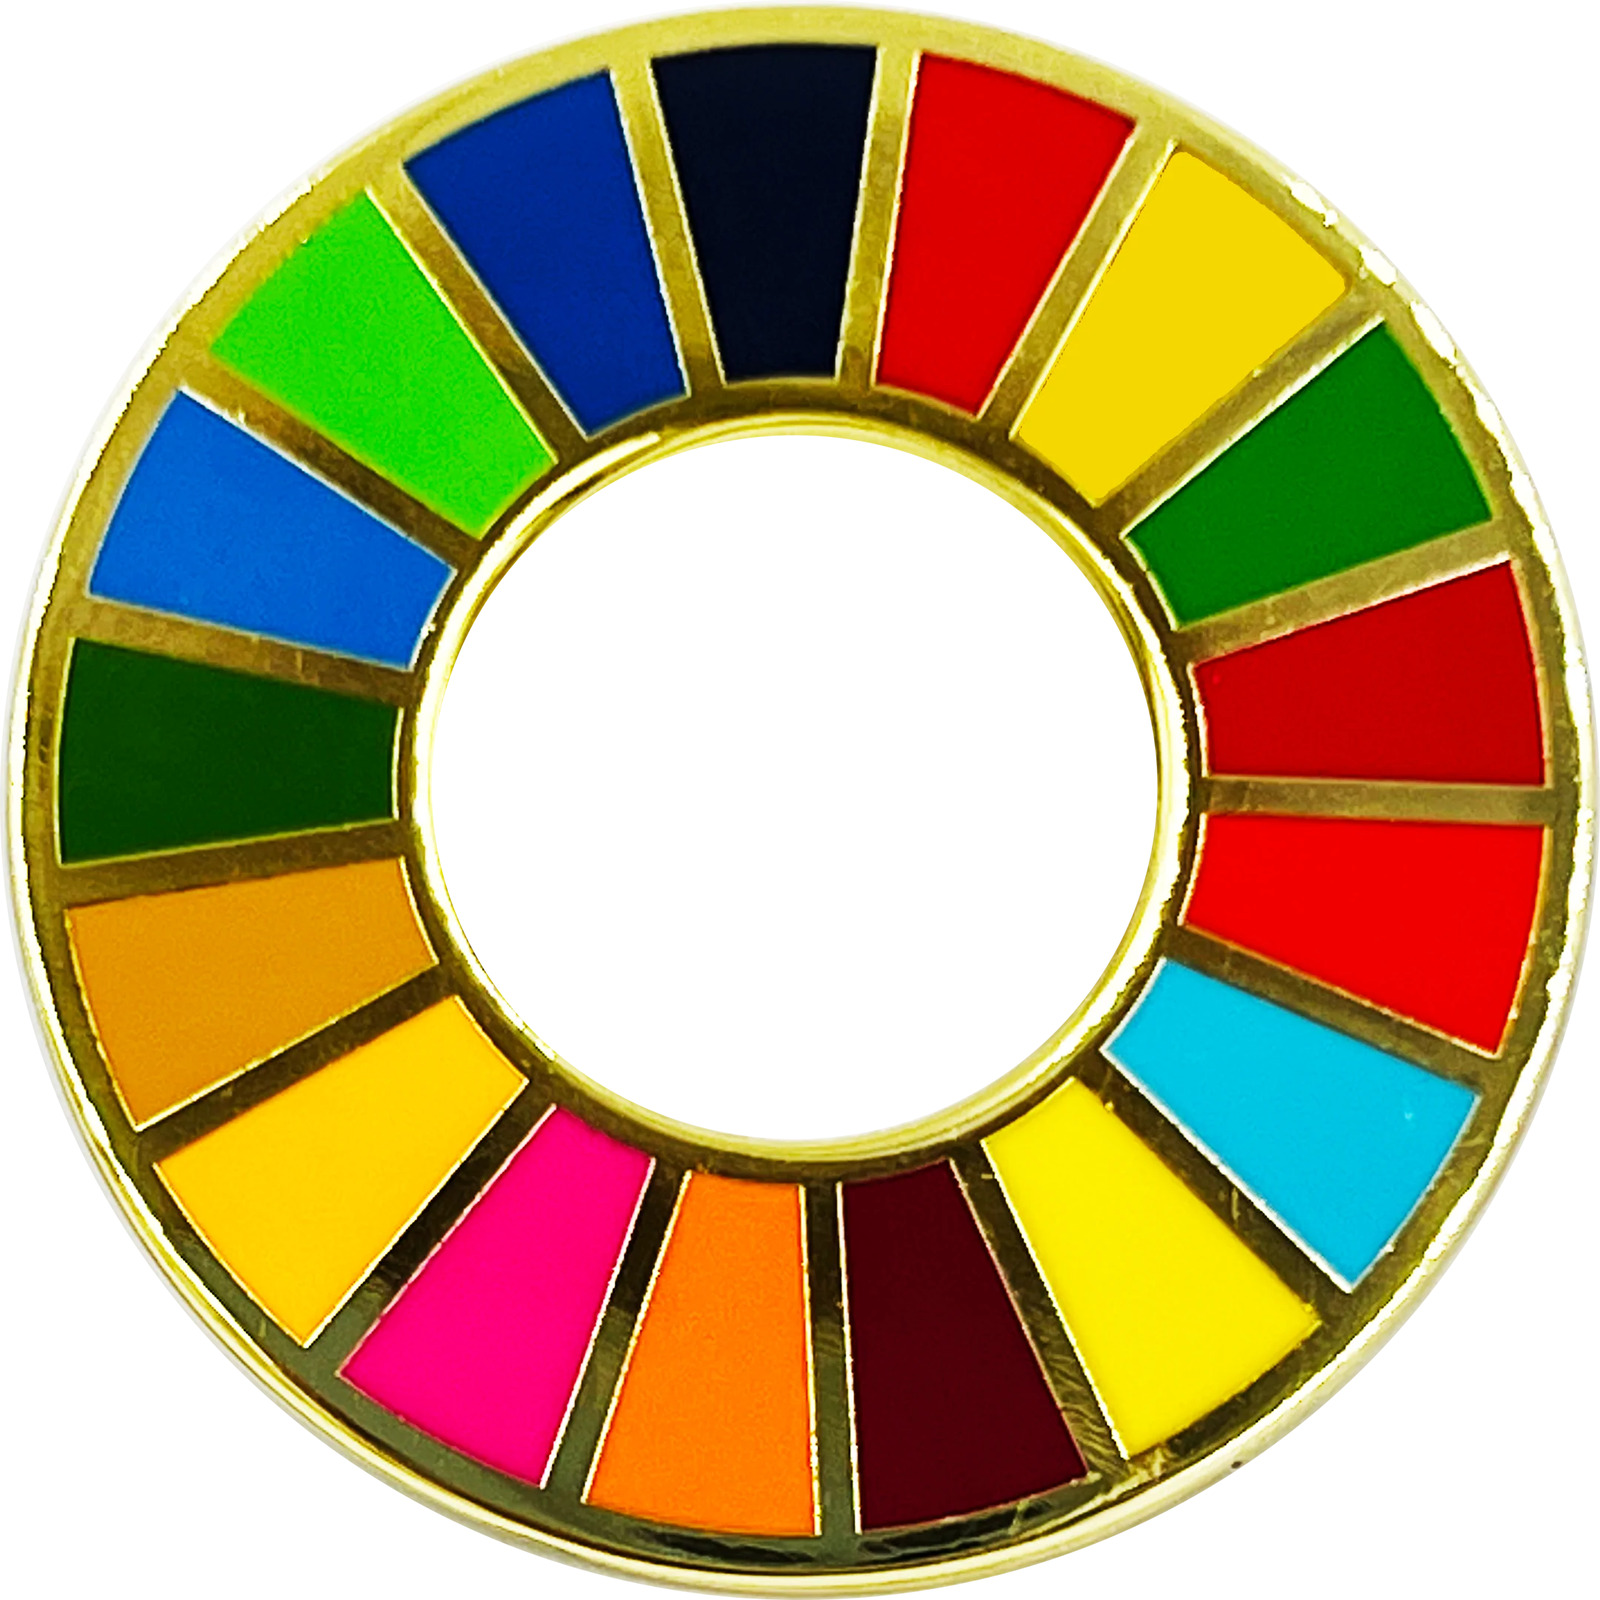 GL3-004 UN 17 Sustainable Development Goals United Nation not NATO Global Goals